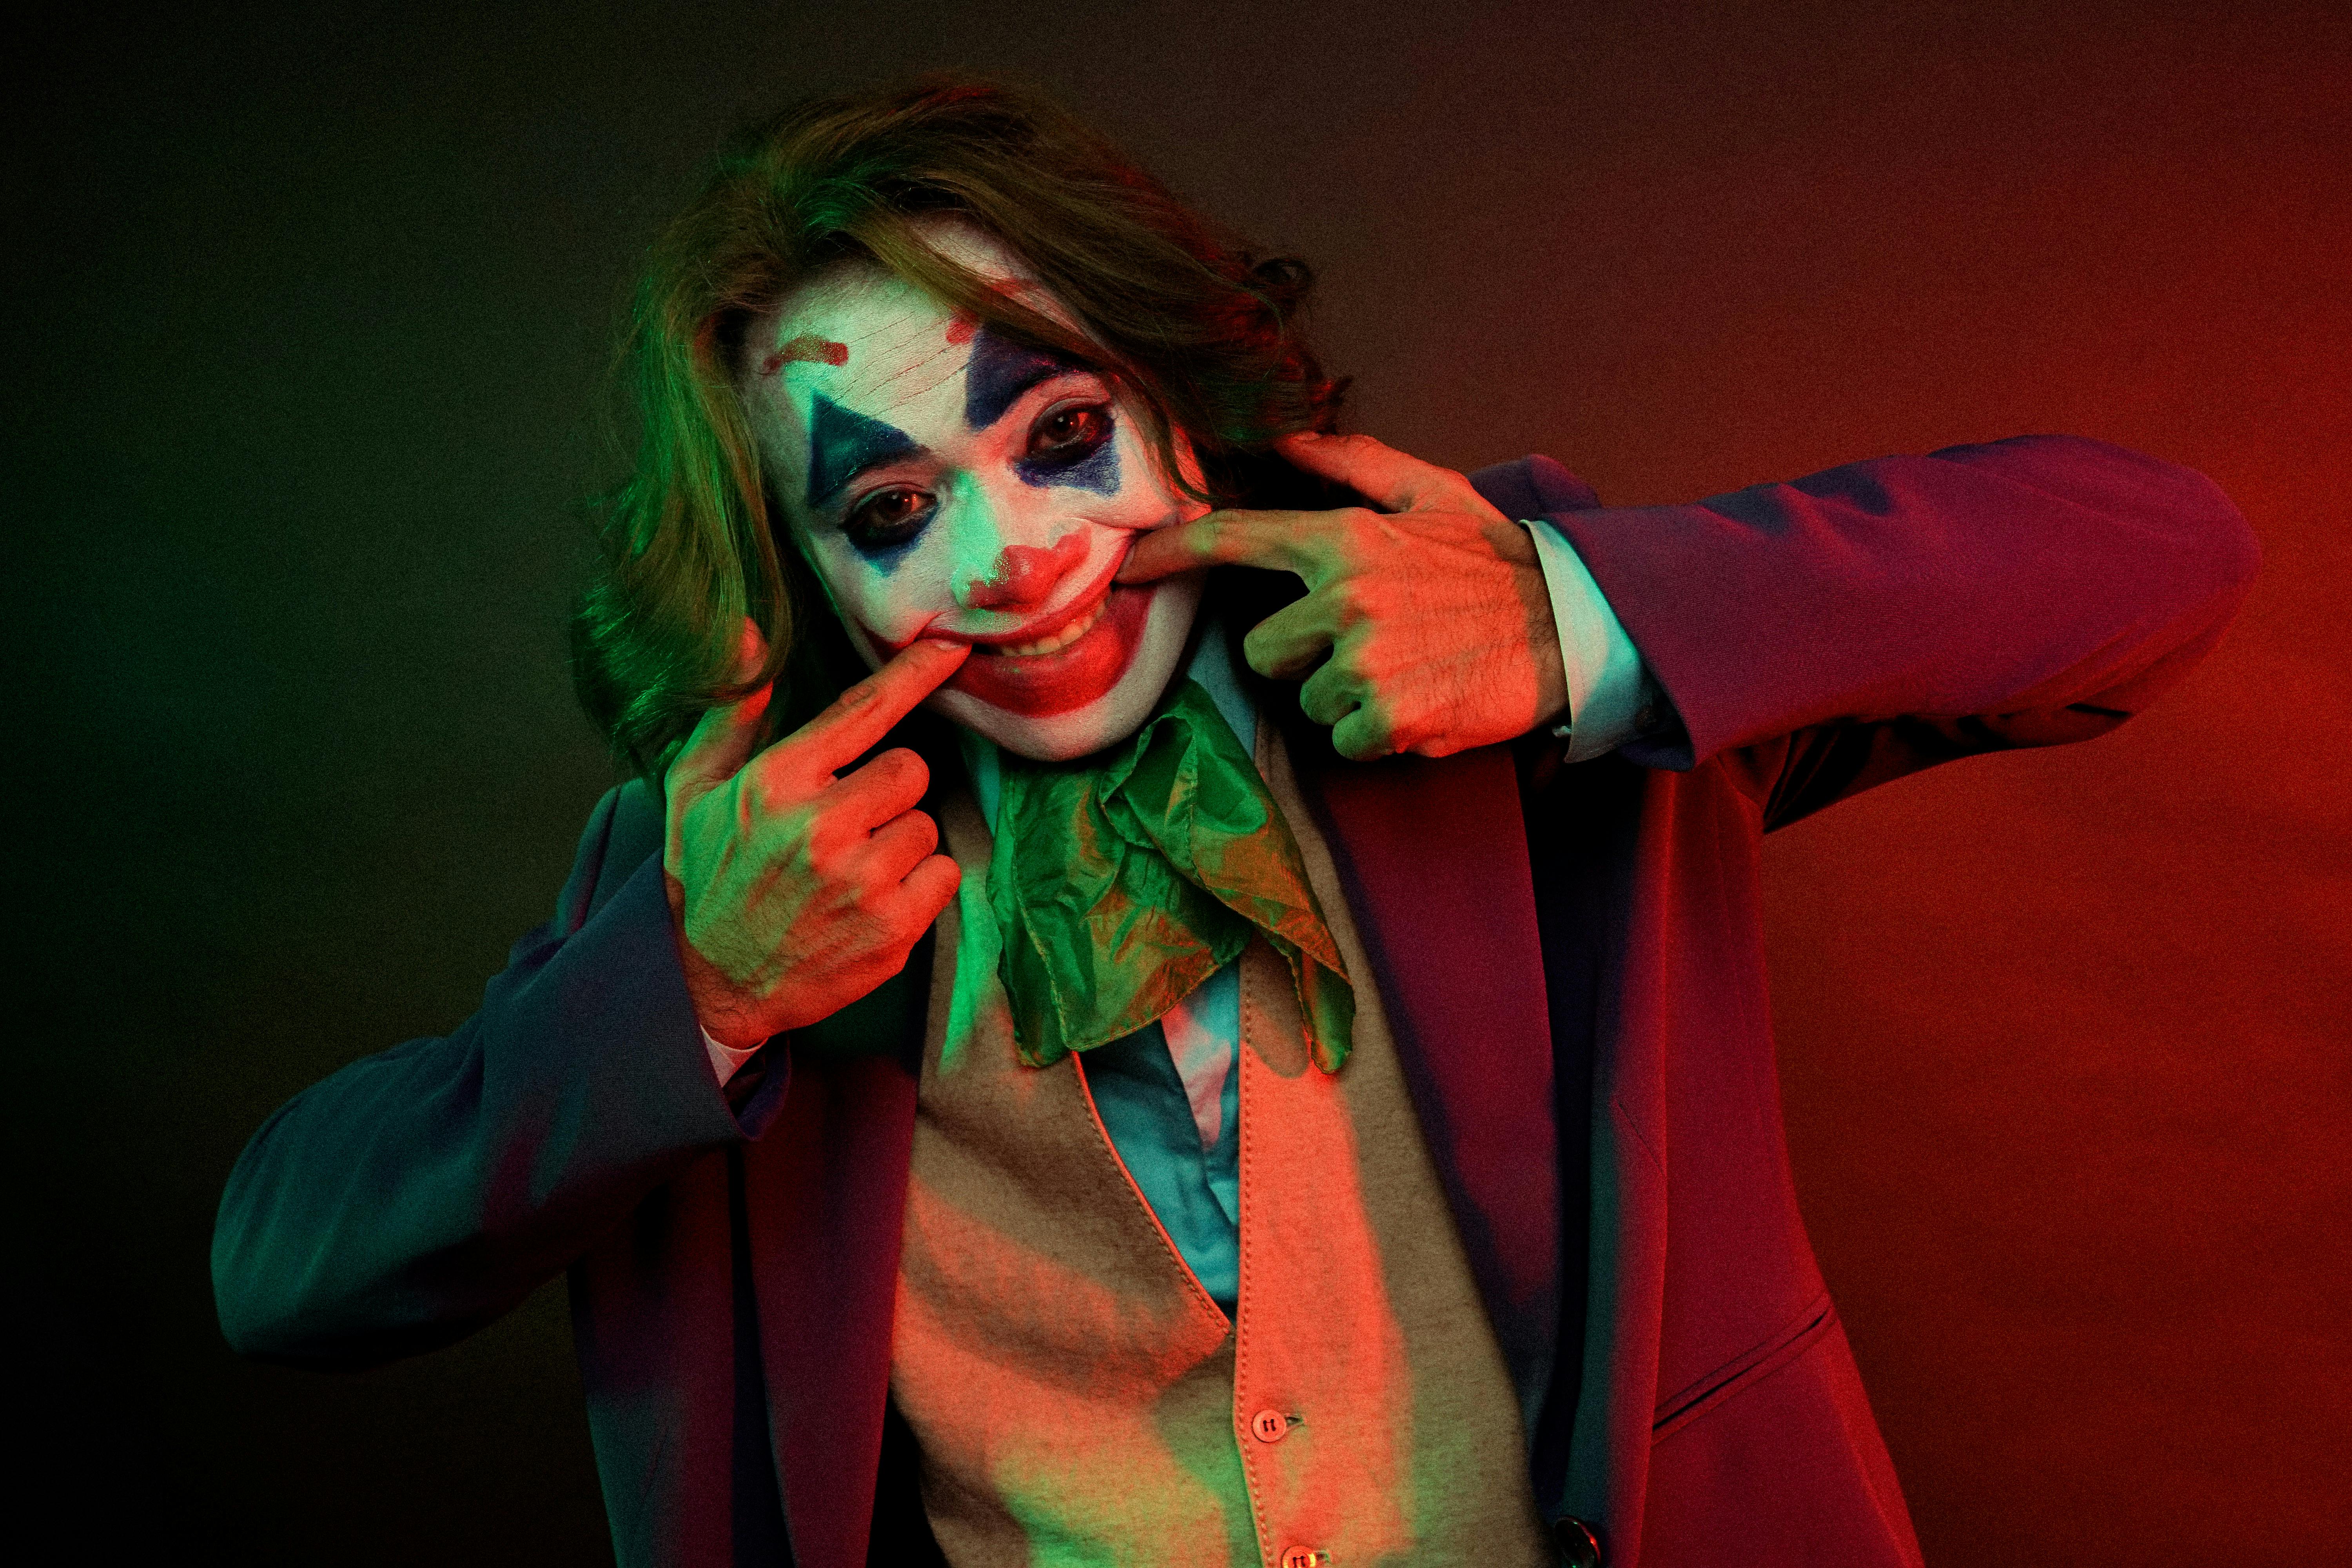 Joker Photos, Download The BEST Free Joker Stock Photos & HD Images